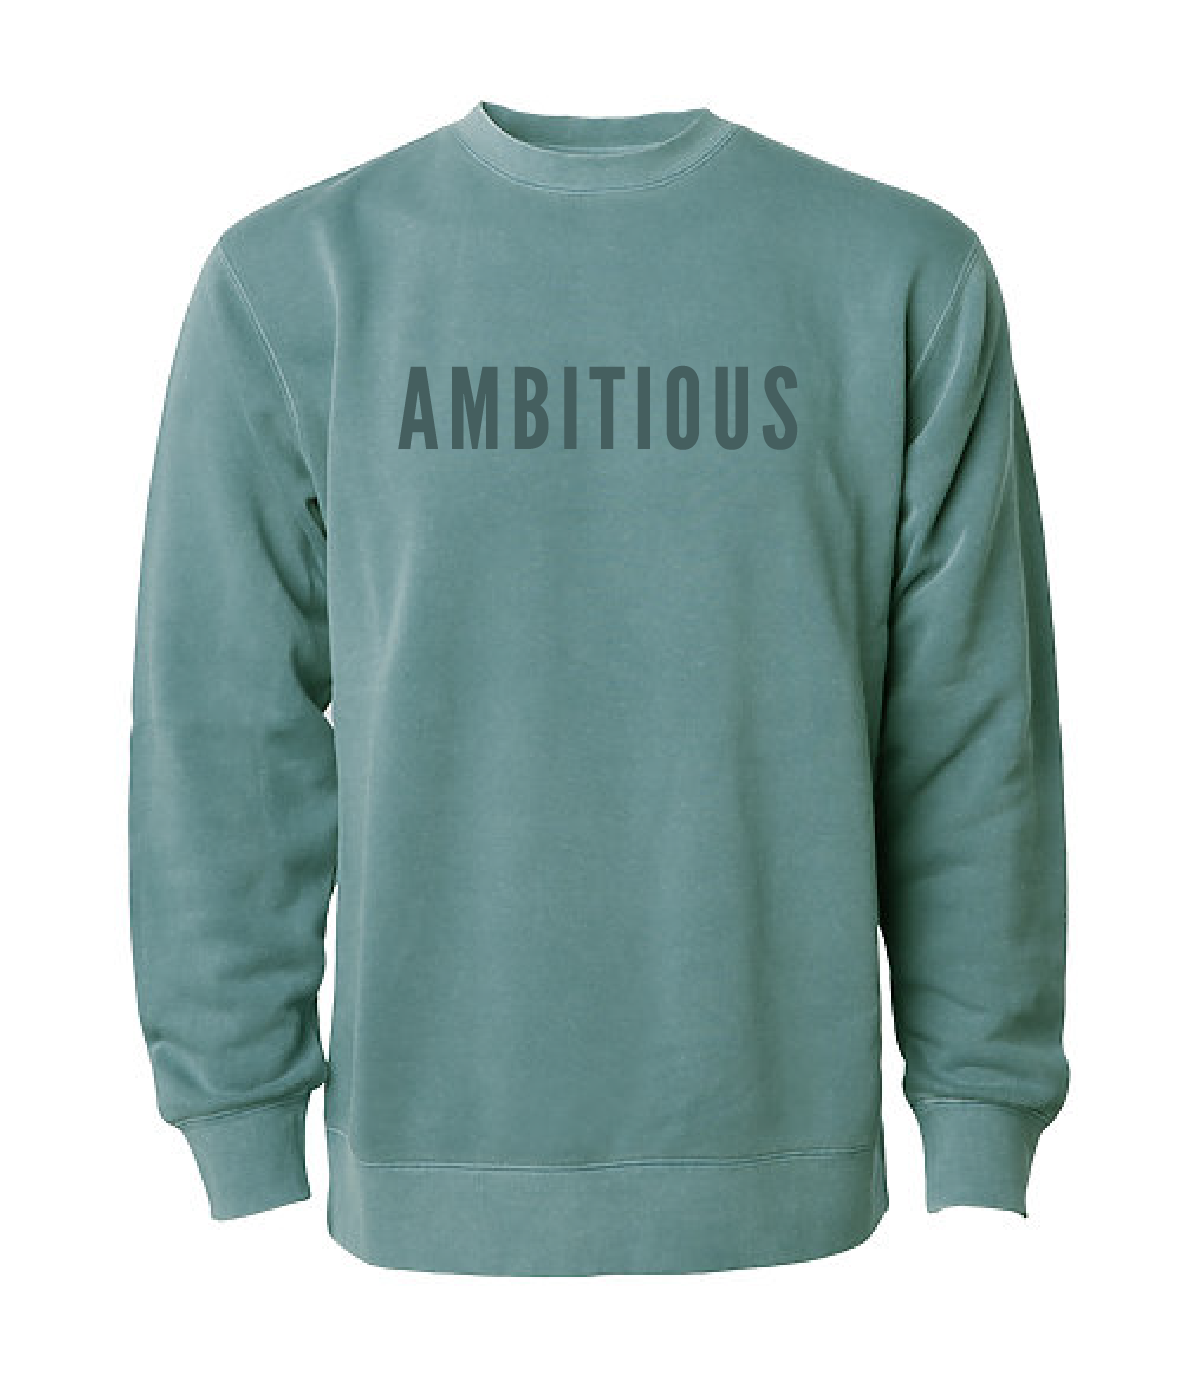 Ambitious Soft Garment Dye Crewneck Sweatshirt (Alpine Green)